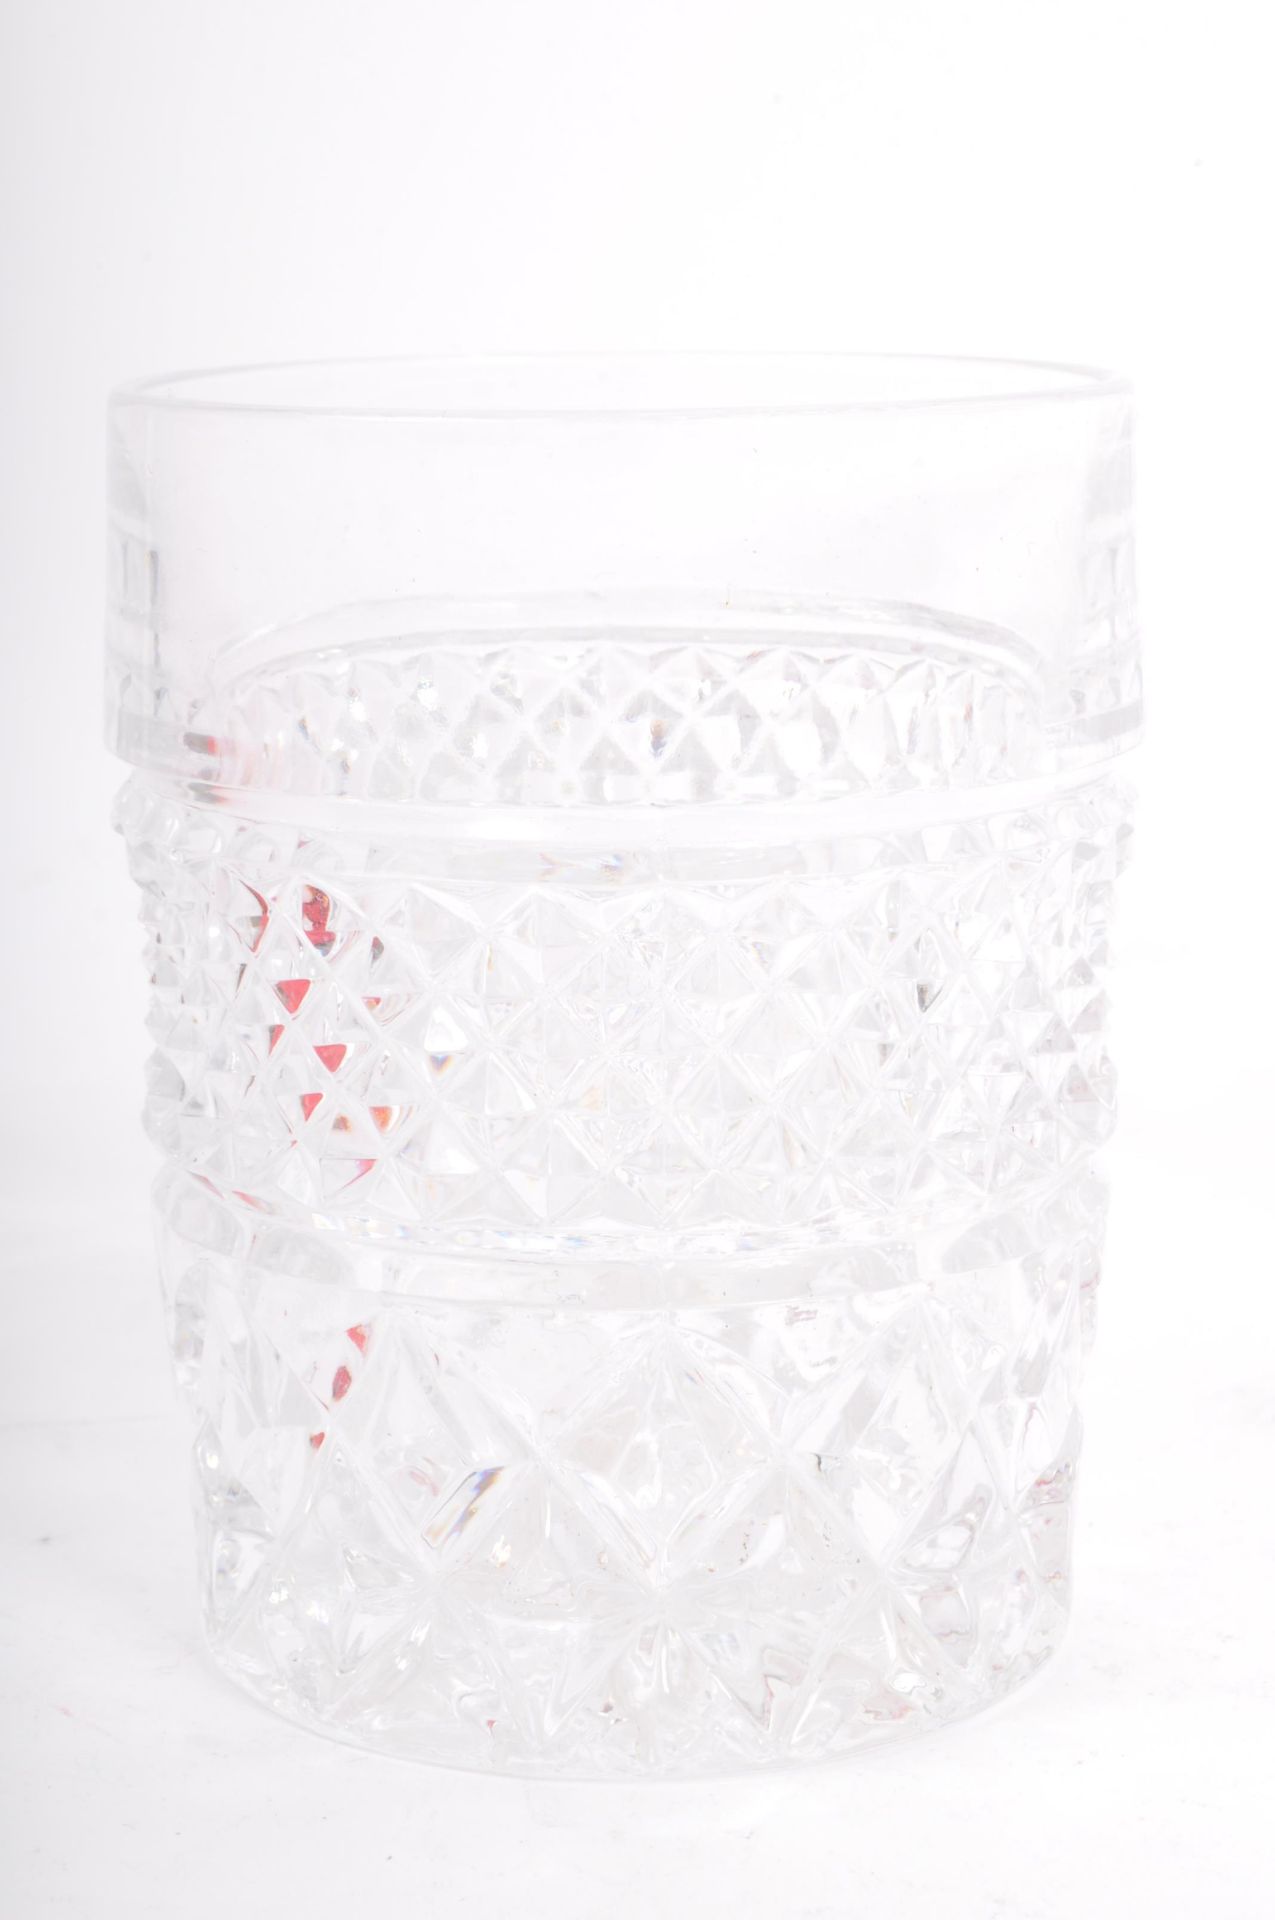 VINTAGE 20TH CENTURY LIQUOR GLASS DECANTER & GLASSES - Image 5 of 5